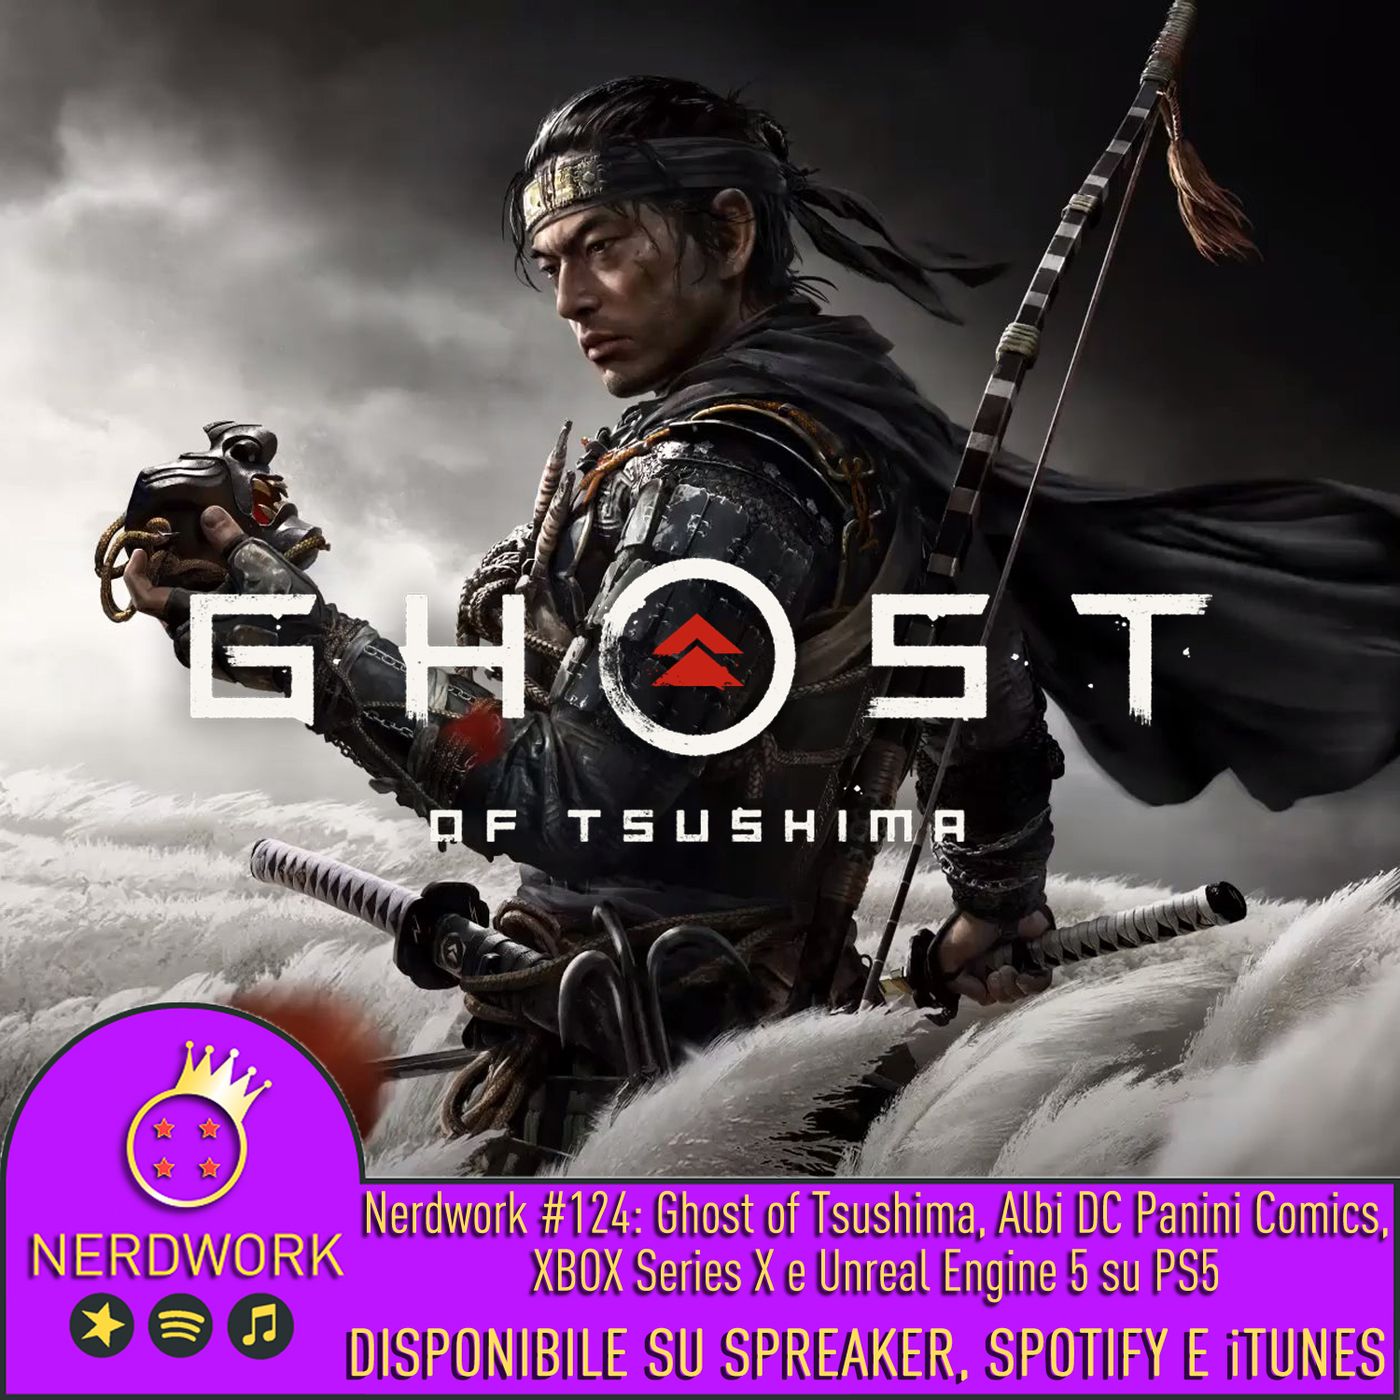 Nerdwork #124 - Ghost of Tsushima, gli albi DC sbarcano in Italia, Xbox Series X "Gameplay" Event&Polemichette